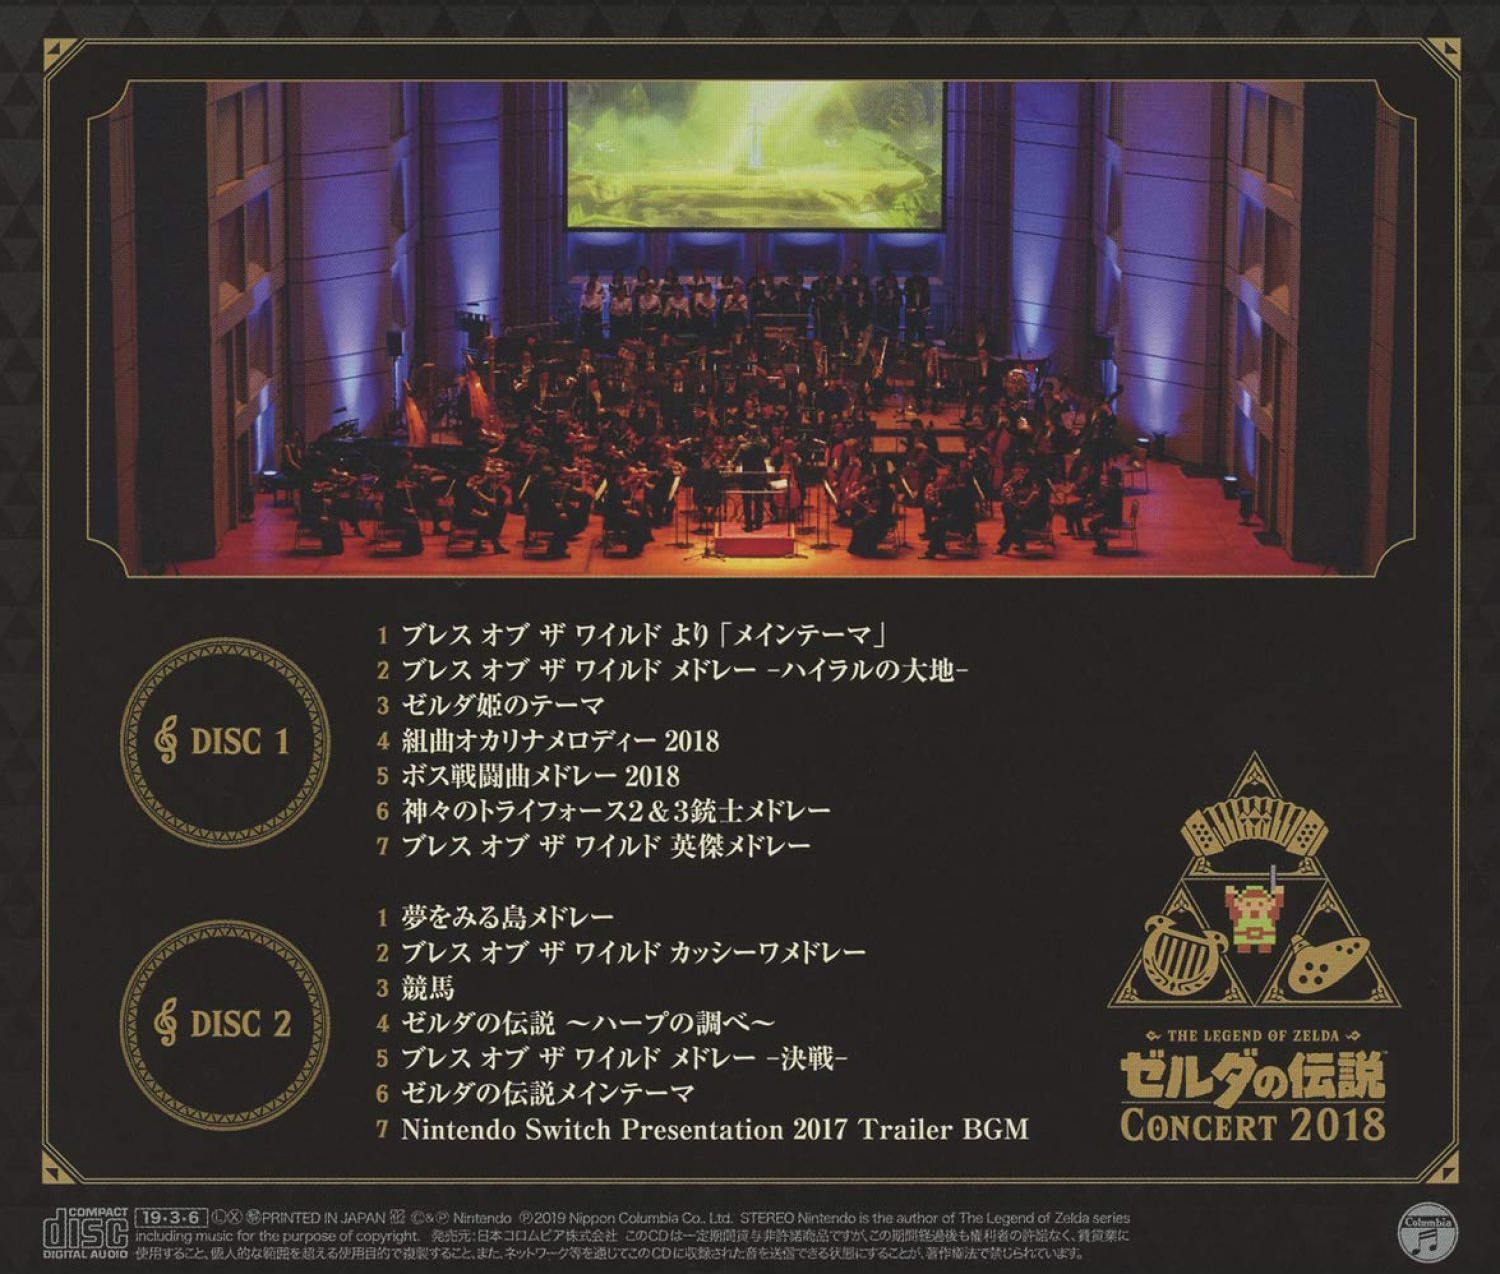 Legend Of Zelda The Concert 18 Mp3 Download Legend Of Zelda The Concert 18 Soundtracks For Free